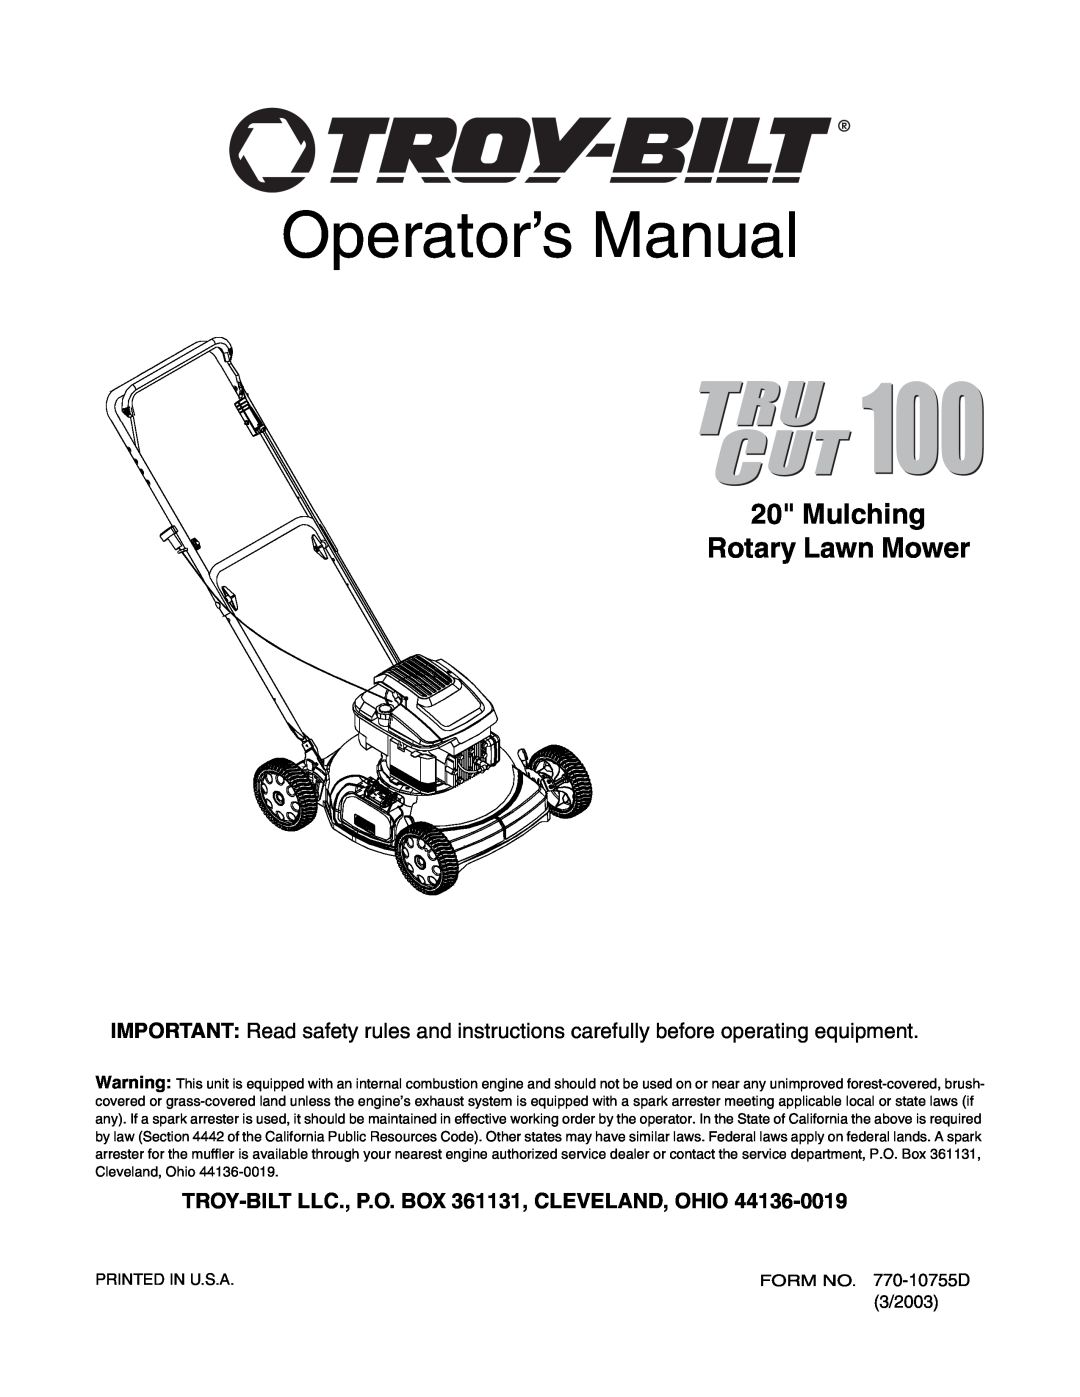 Troy-Bilt TRU CUT 100 manual TROY-BILT LLC., P.O. BOX 361131, CLEVELAND, OHIO, Operator’s Manual 